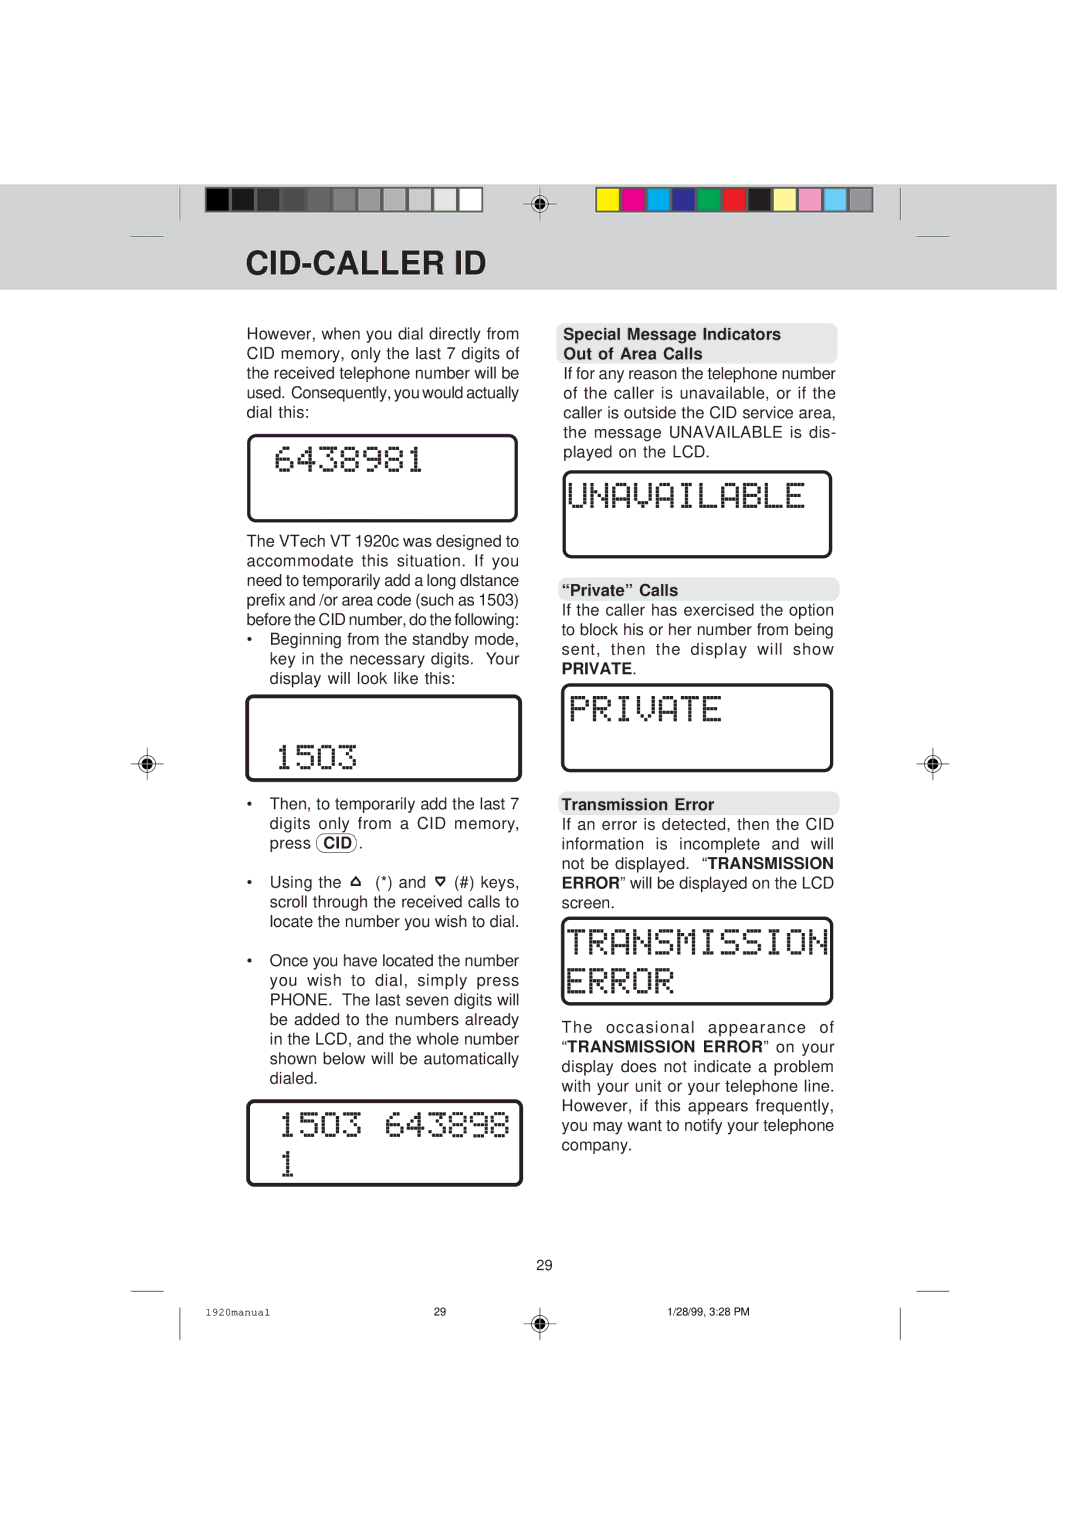 VTech VT 1920C manual Special Message Indicators Out of Area Calls, Private Calls, Transmission Error 